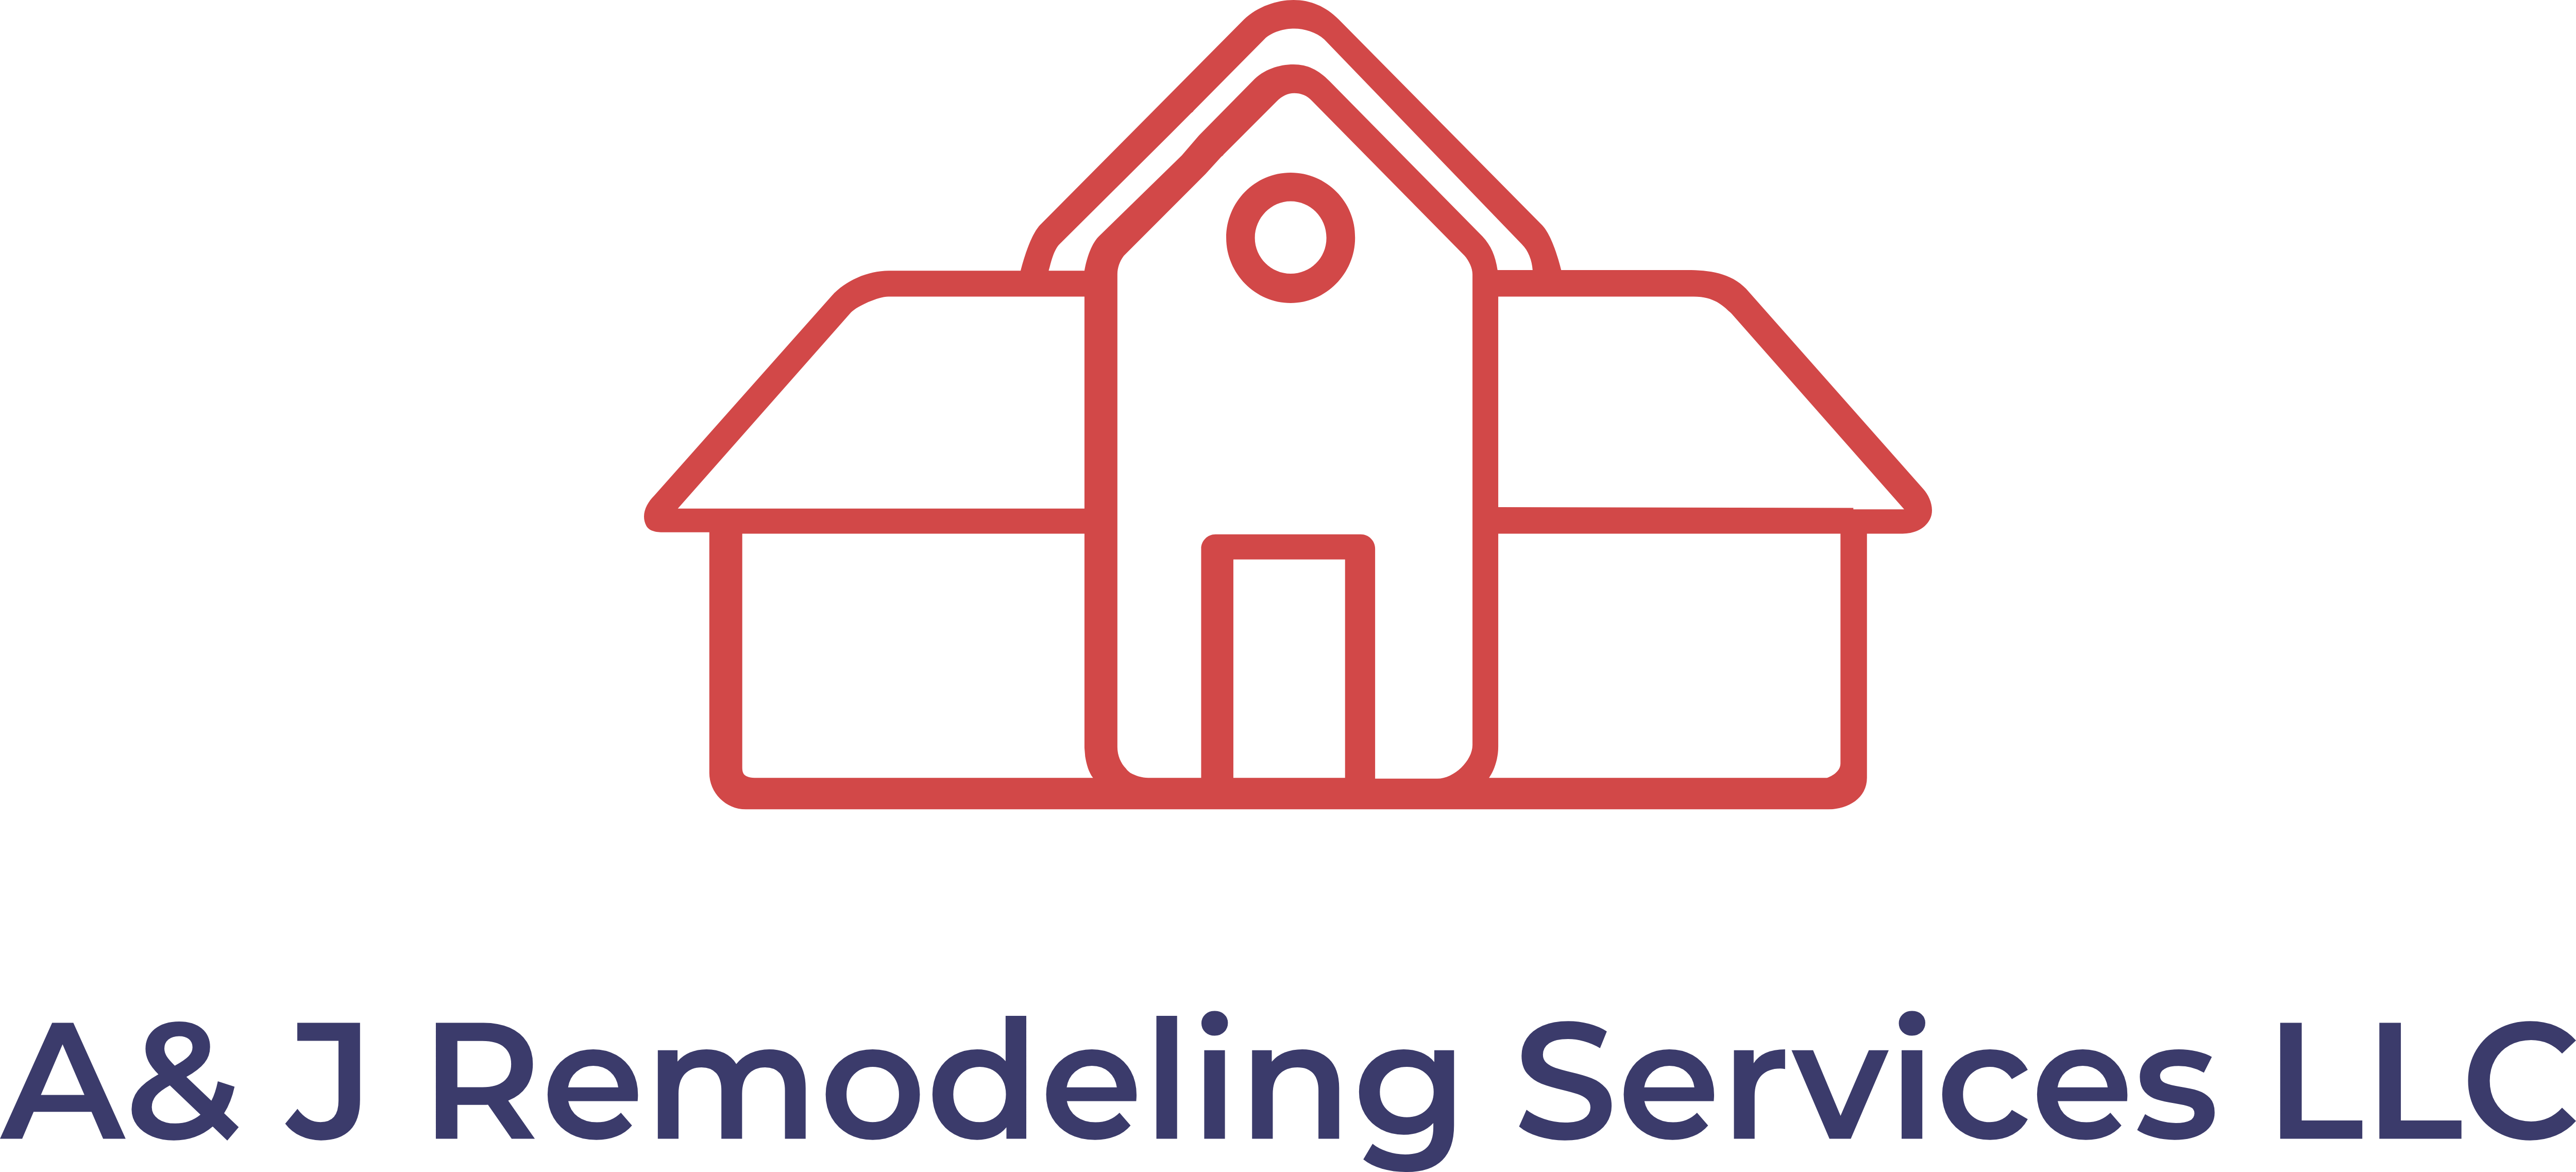 A&J Remodeling Services LLC Logo